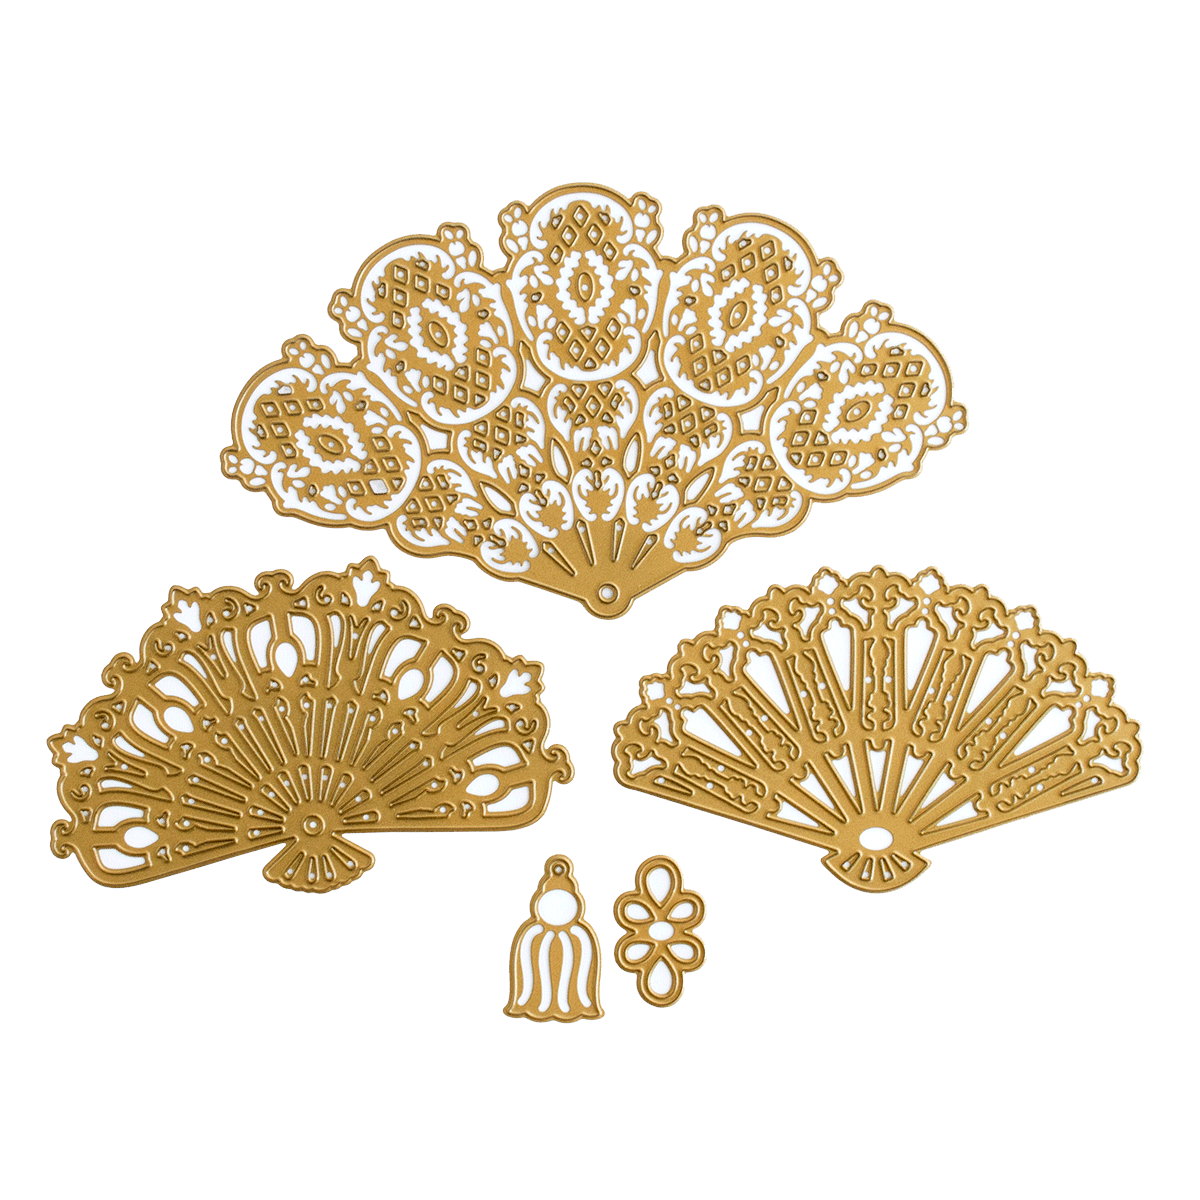 three golden fan shaped objects on a green background.